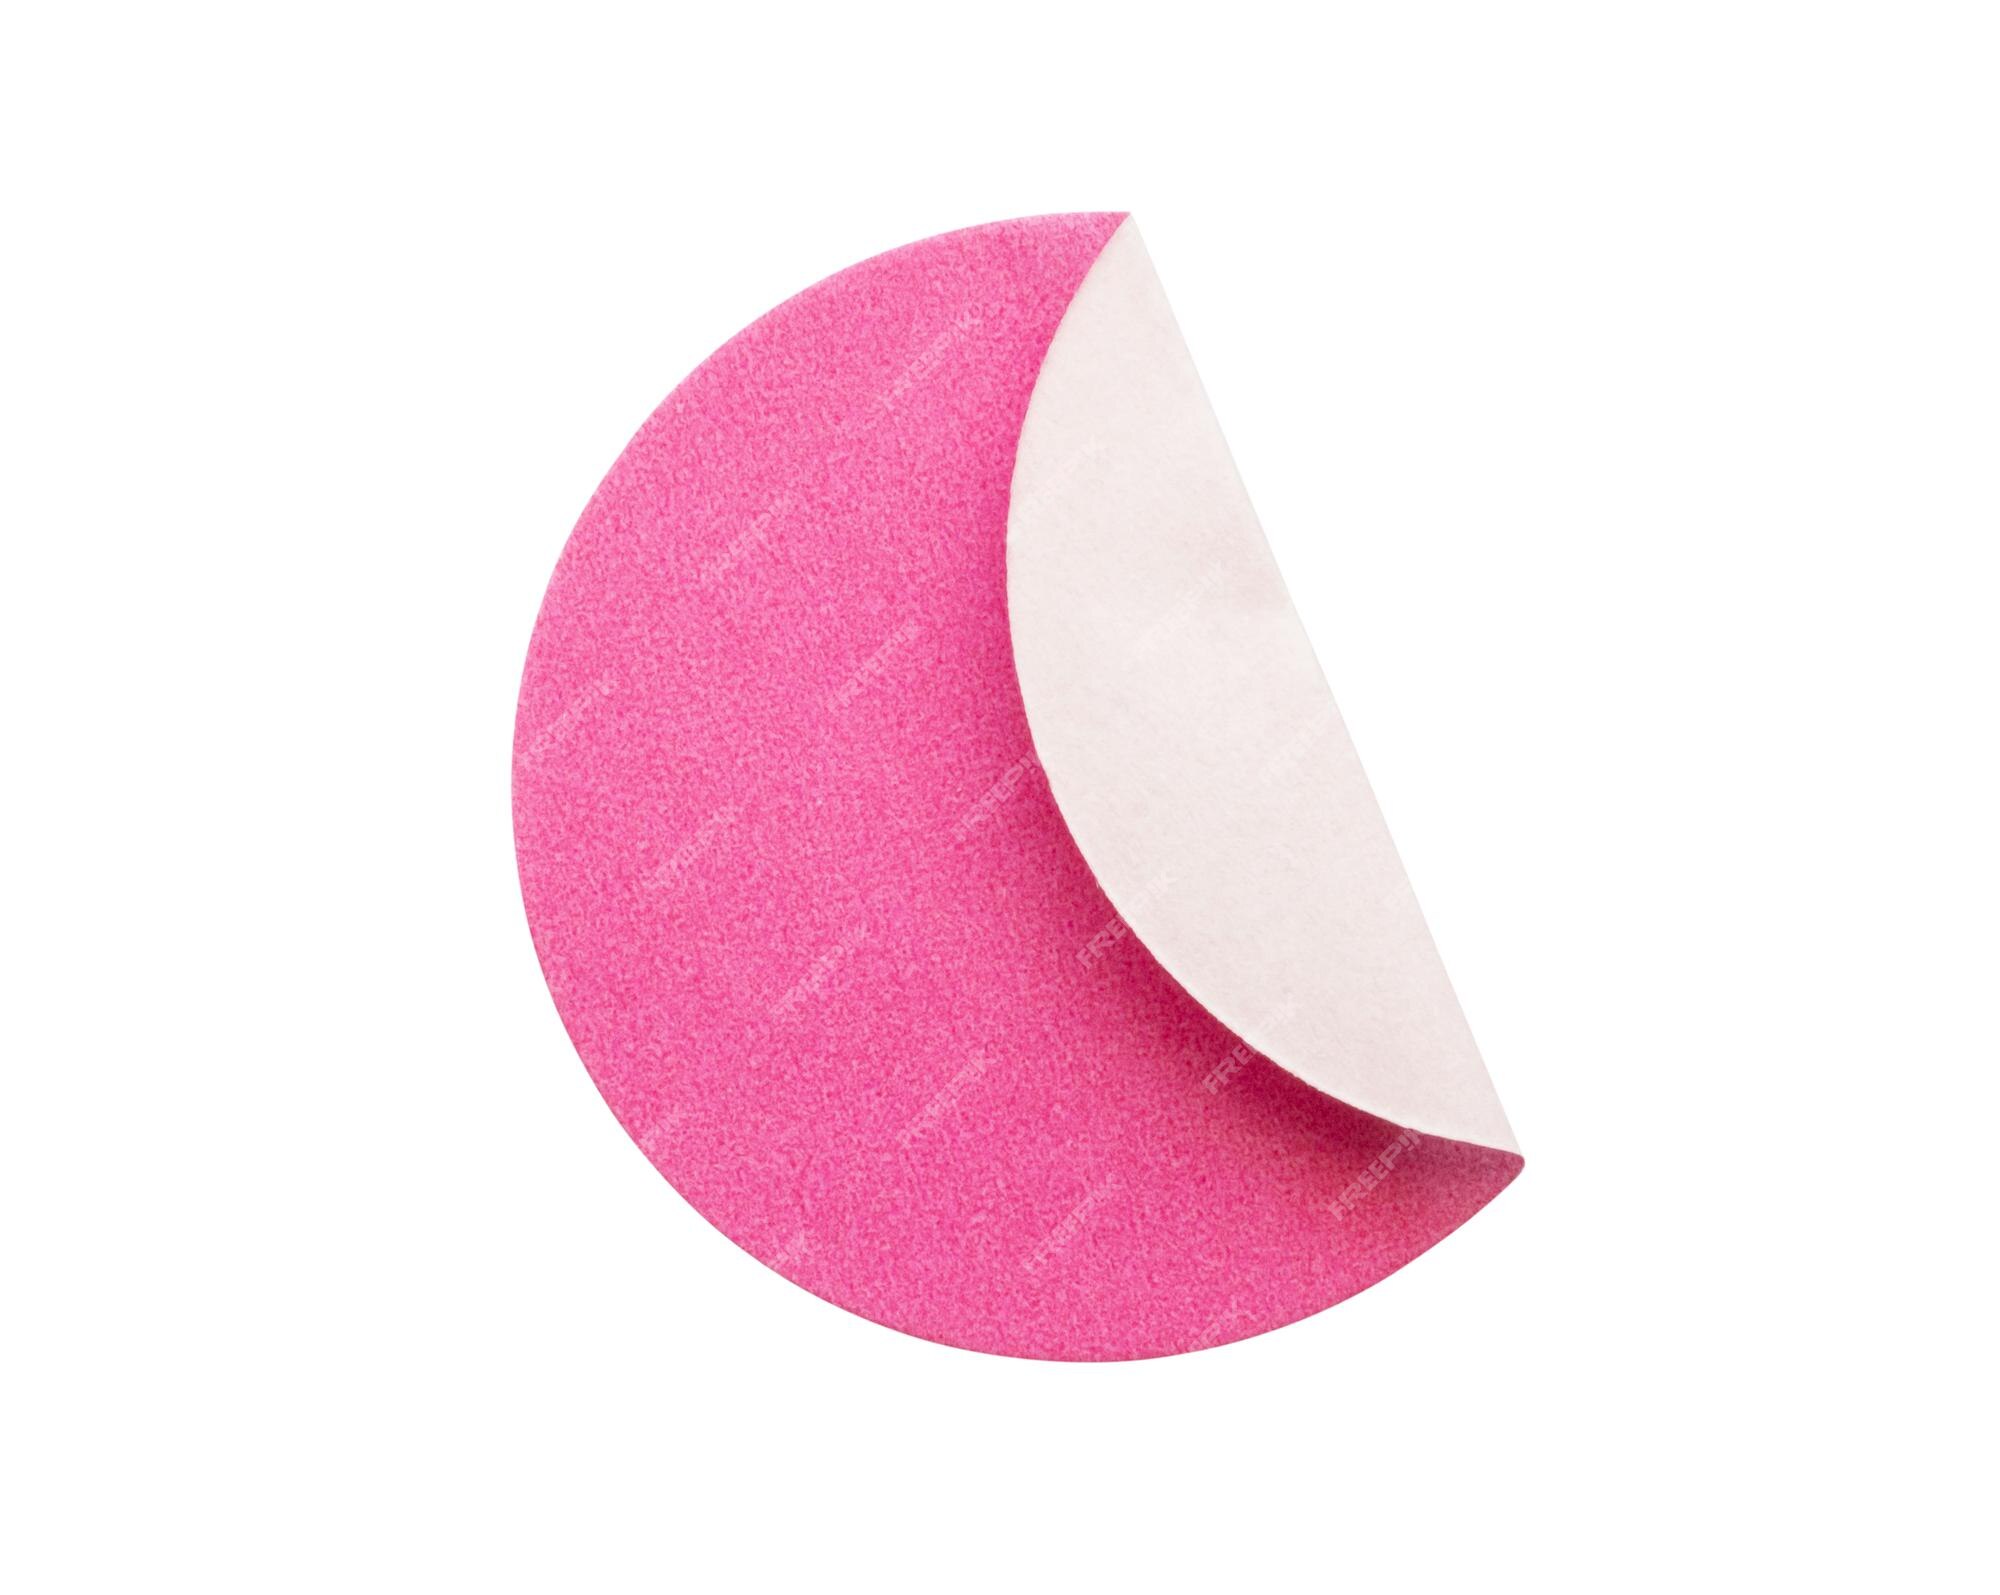 Rótulo Adesivo De Papel Adesivo Redondo Rosa Em Branco Isolado No Fundo Branco Foto Premium 5762